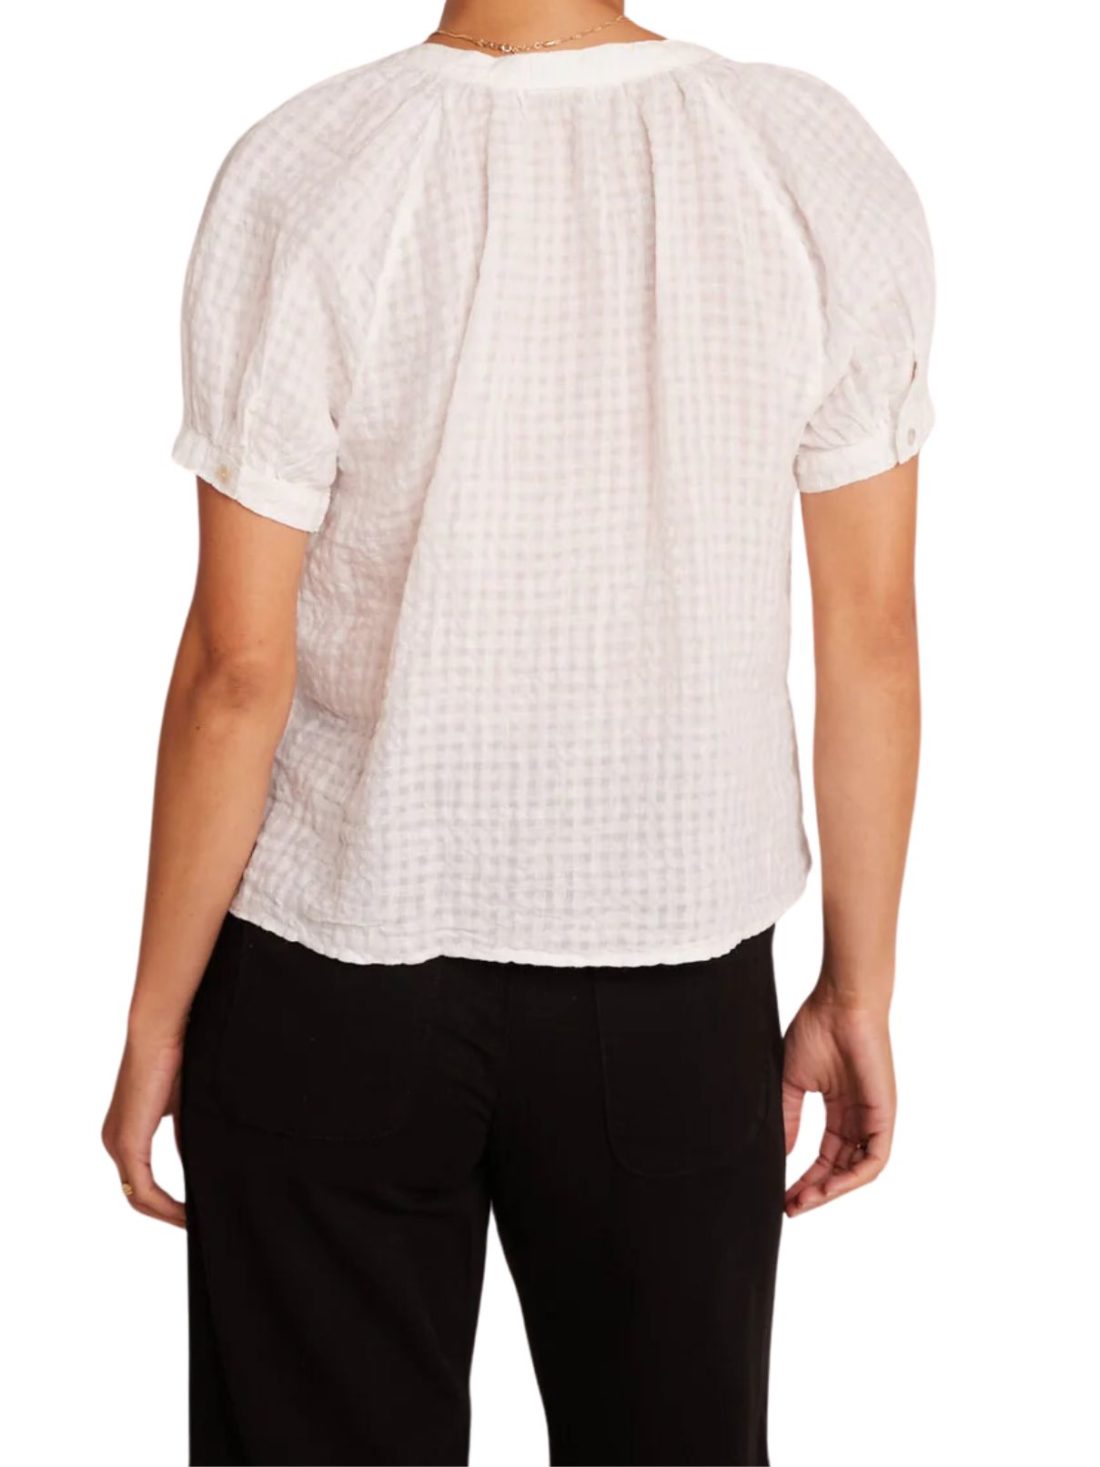 bella dahl s/s raglan pullover top in white